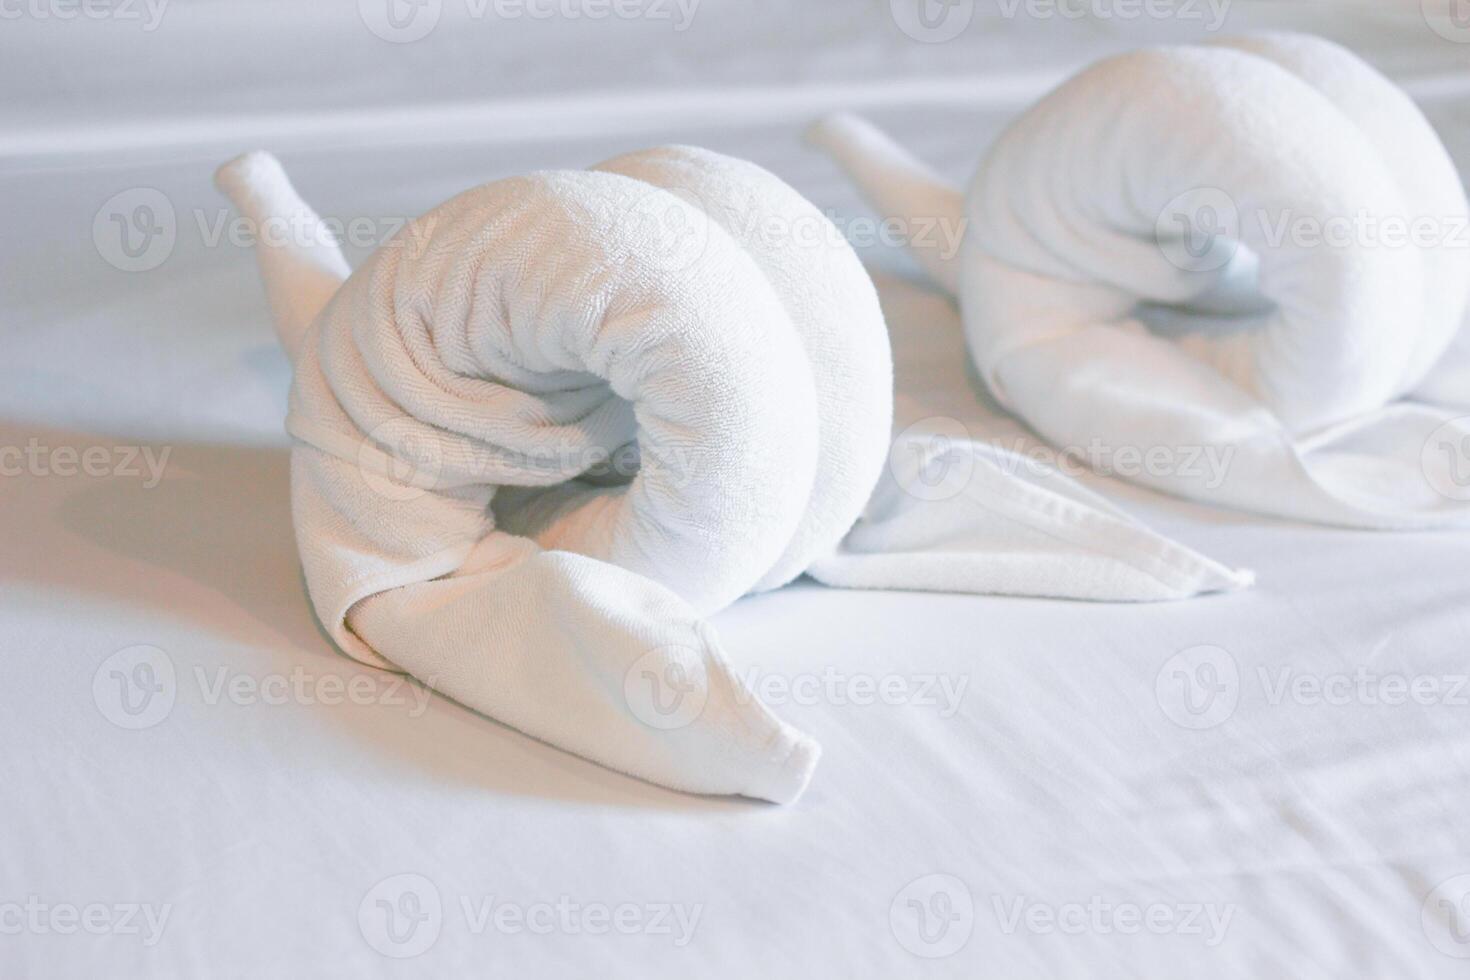 Soft focus on white towel decoration in bedroom interior - Vintage Light Filter photo